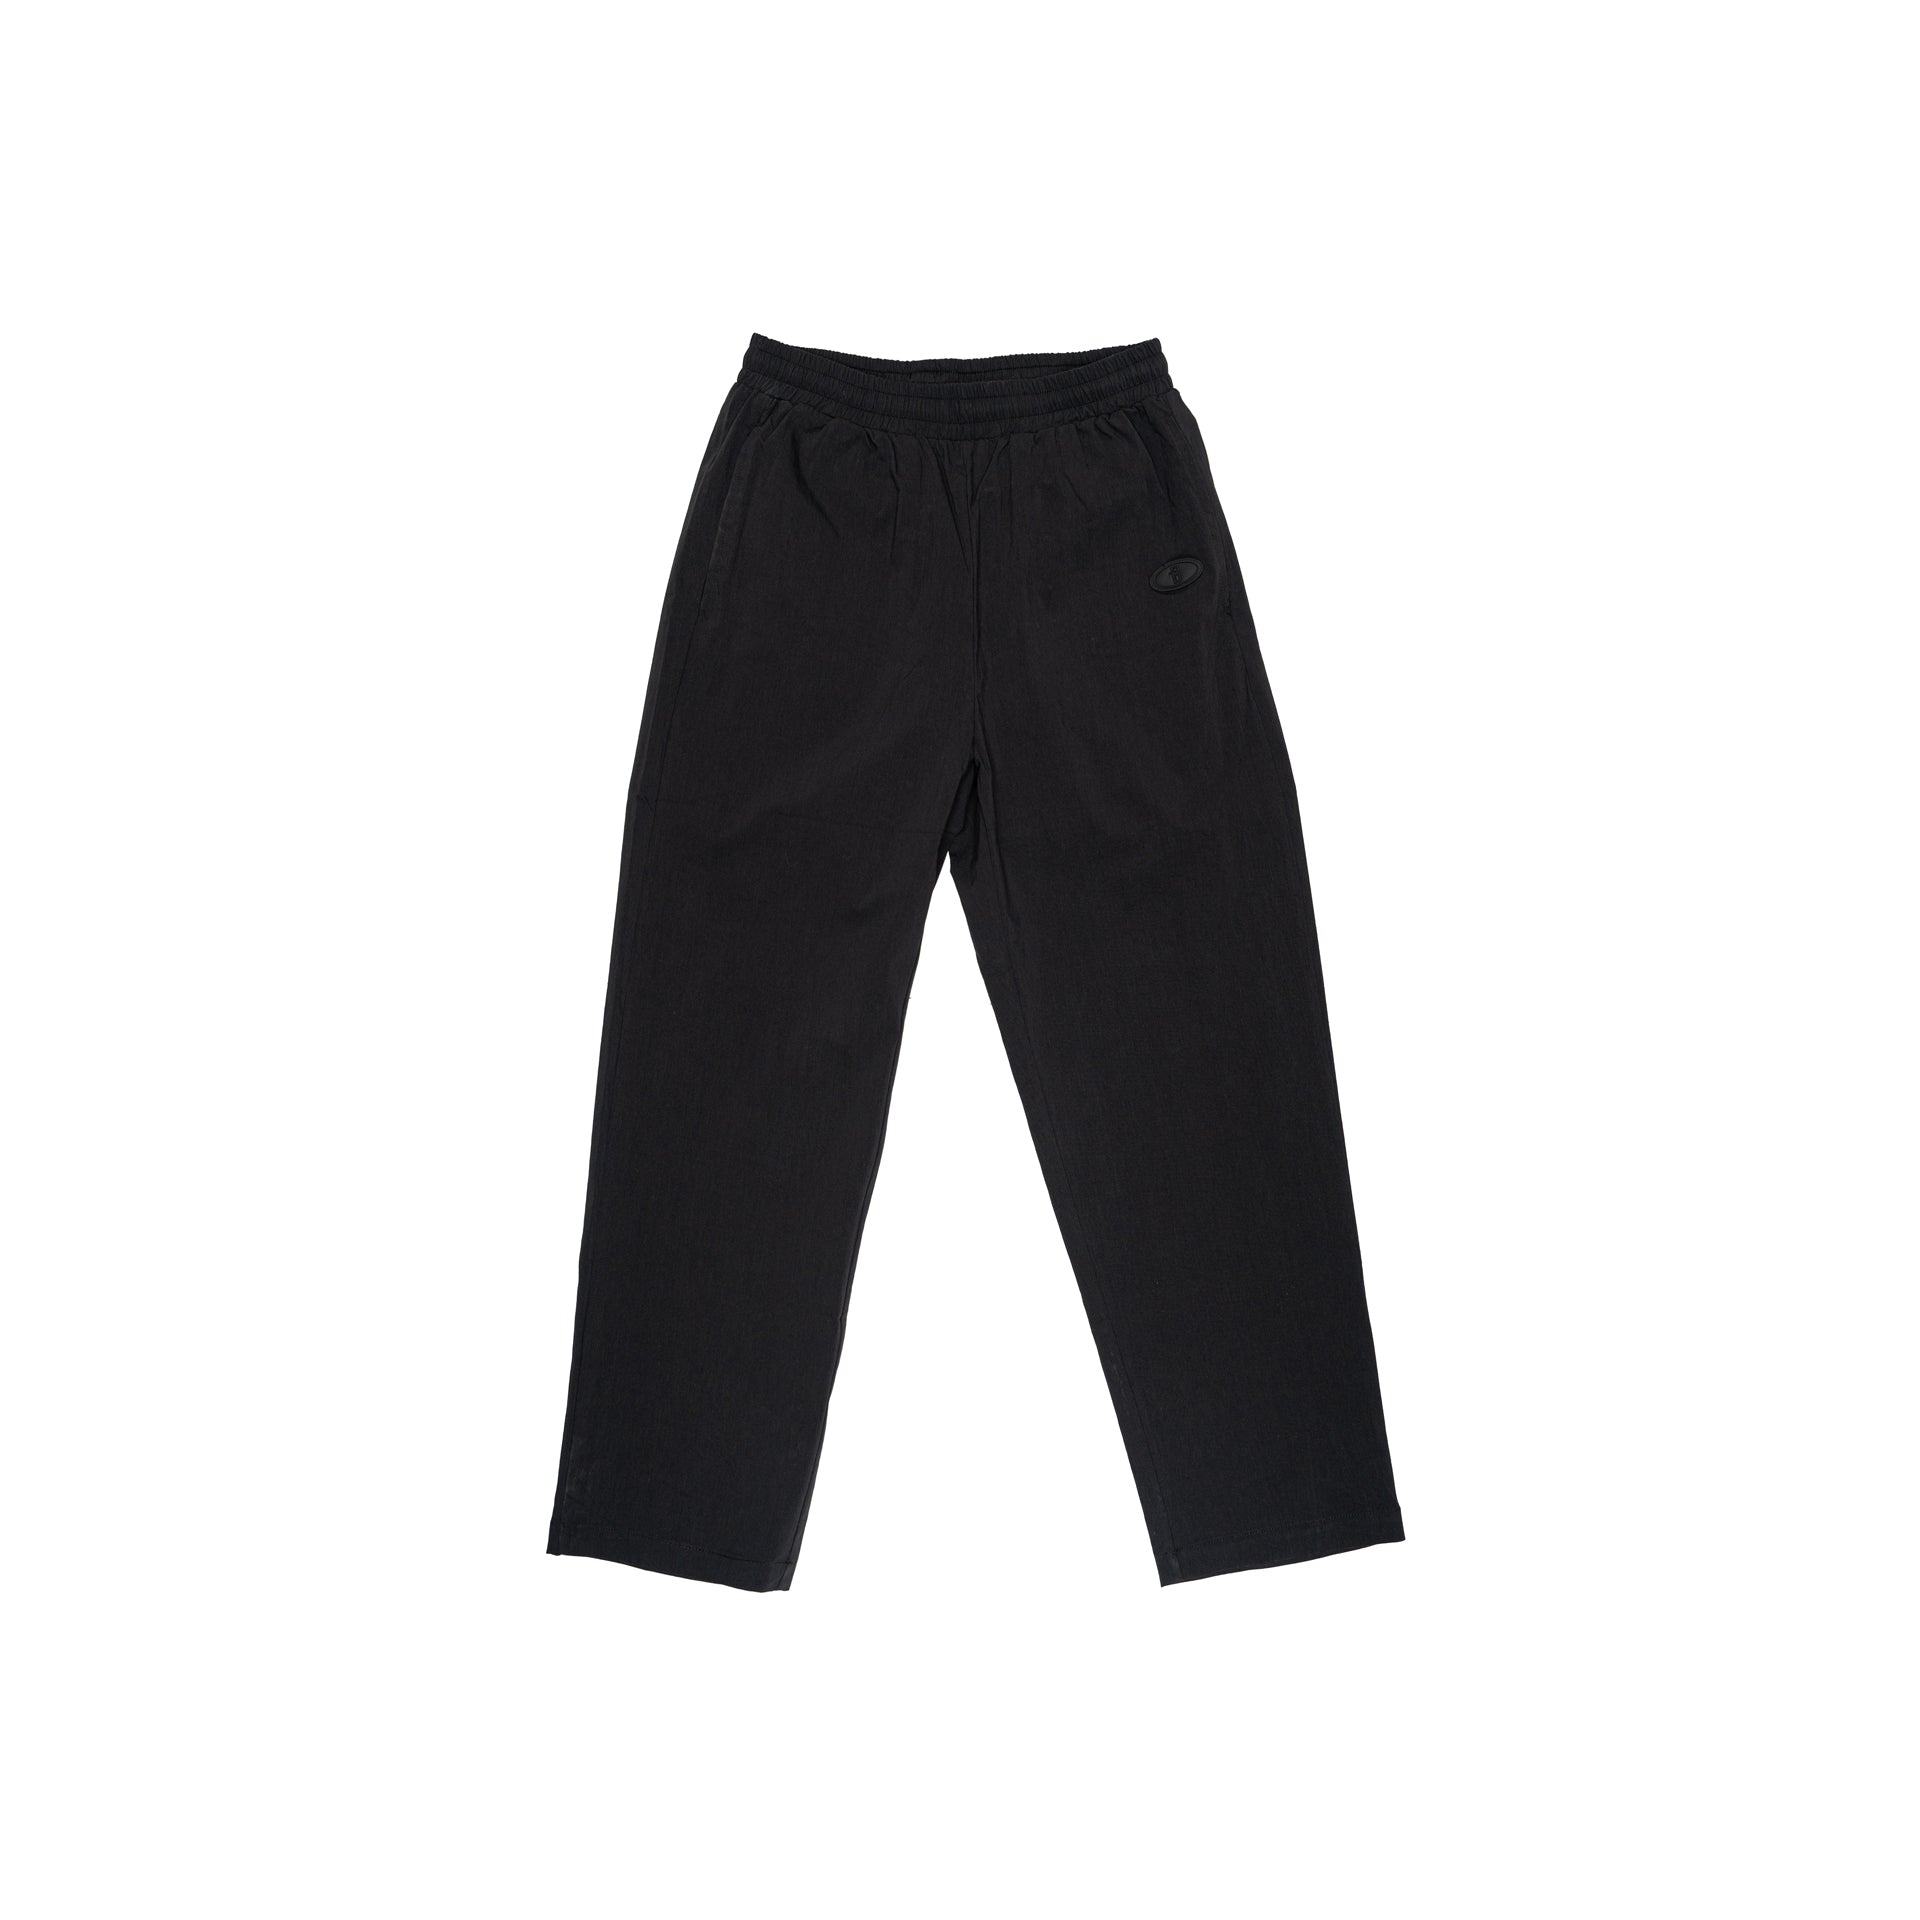 Black Premium Pants by Brandtionary